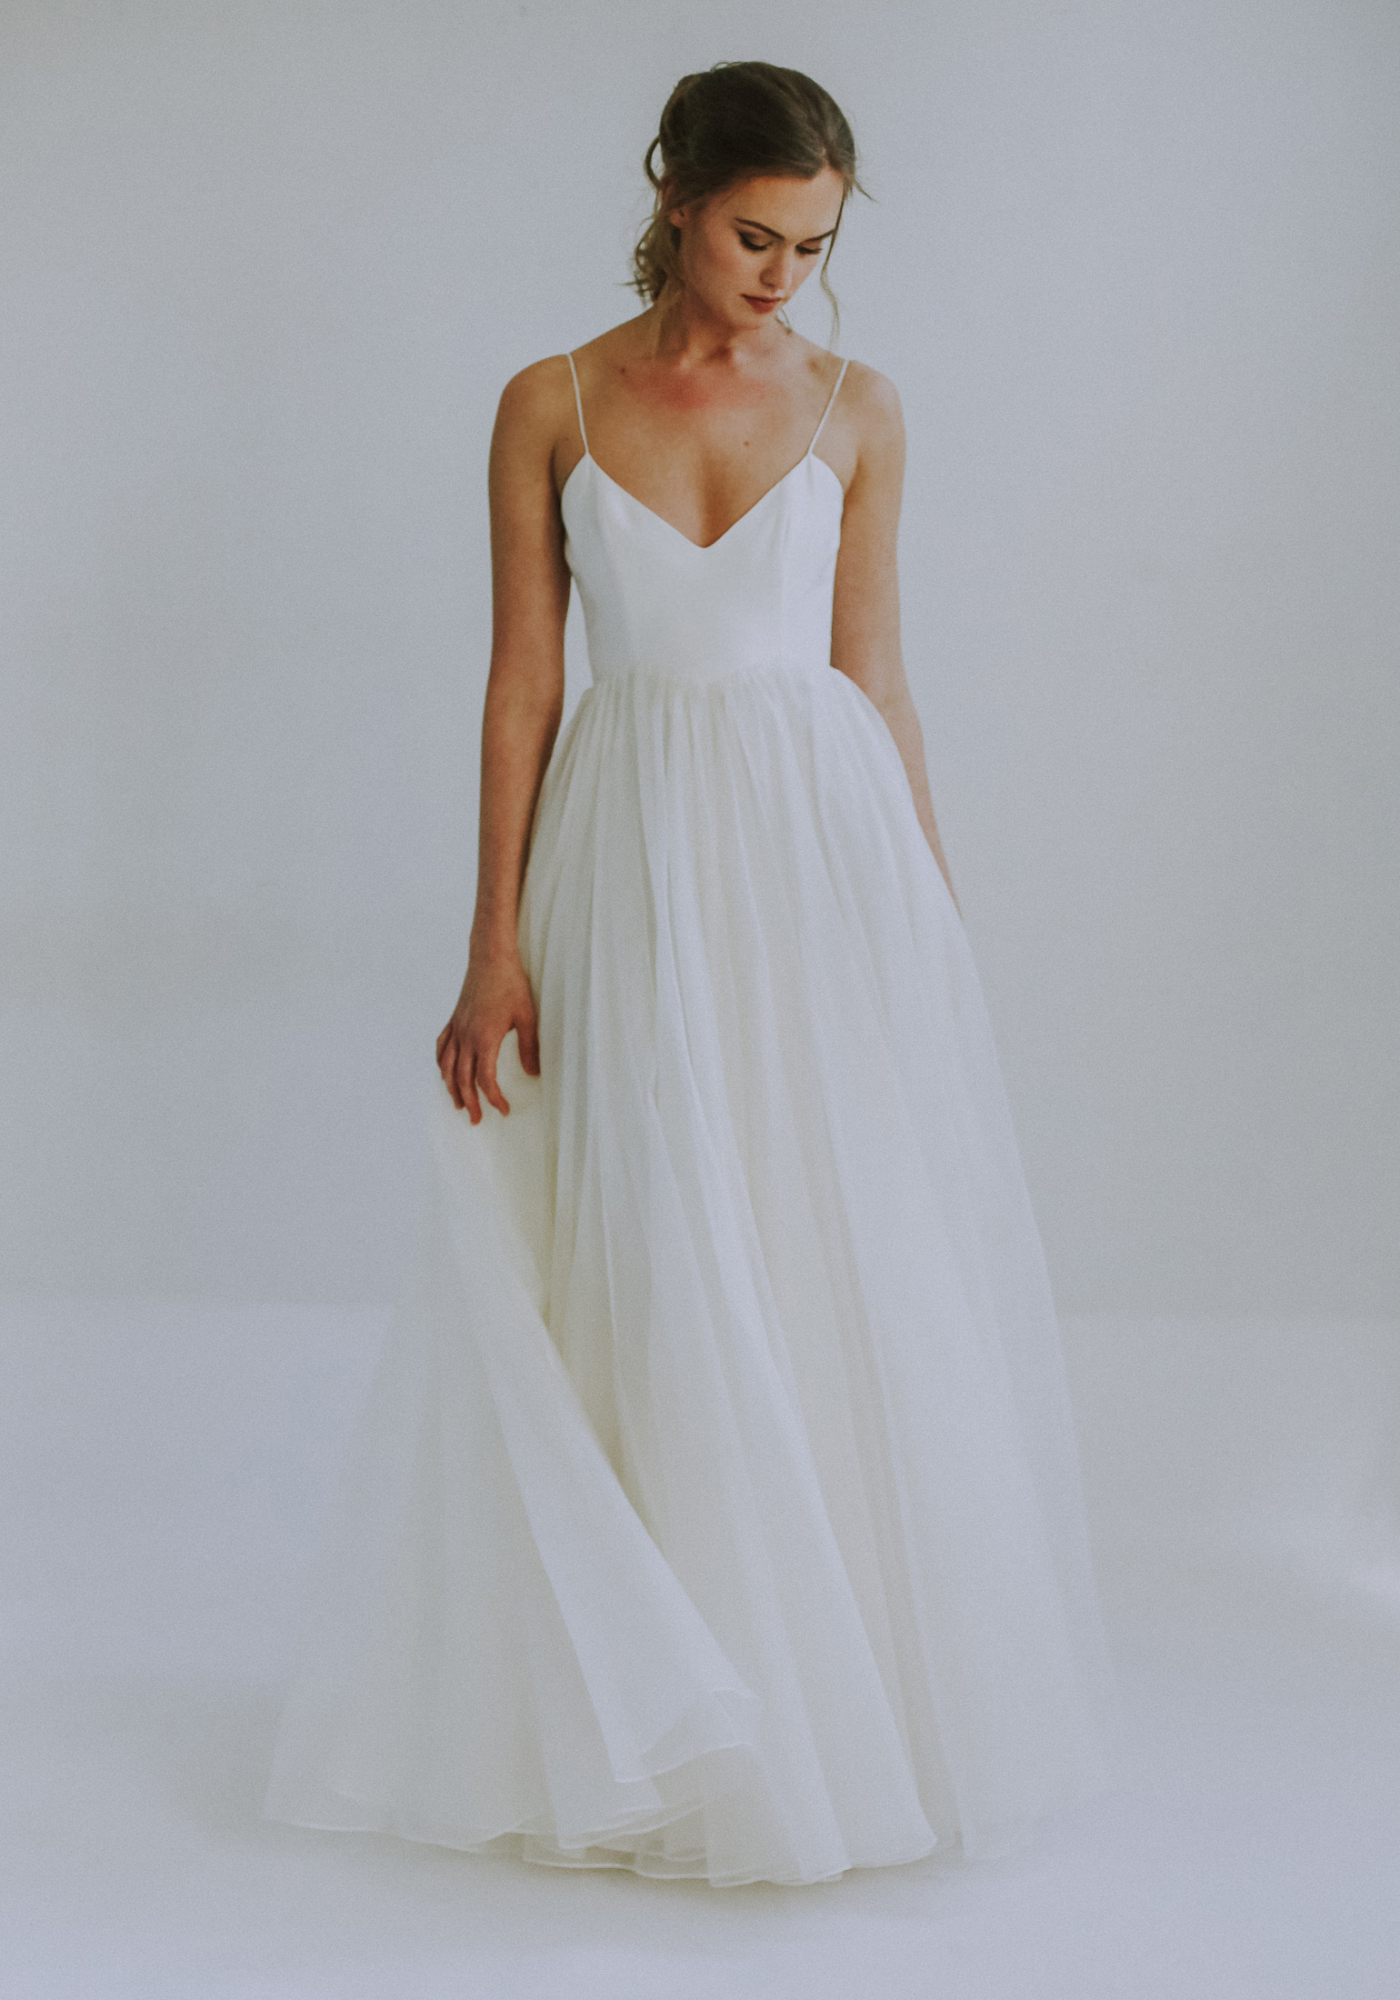 Leanne Marshall Cami Wedding Dress